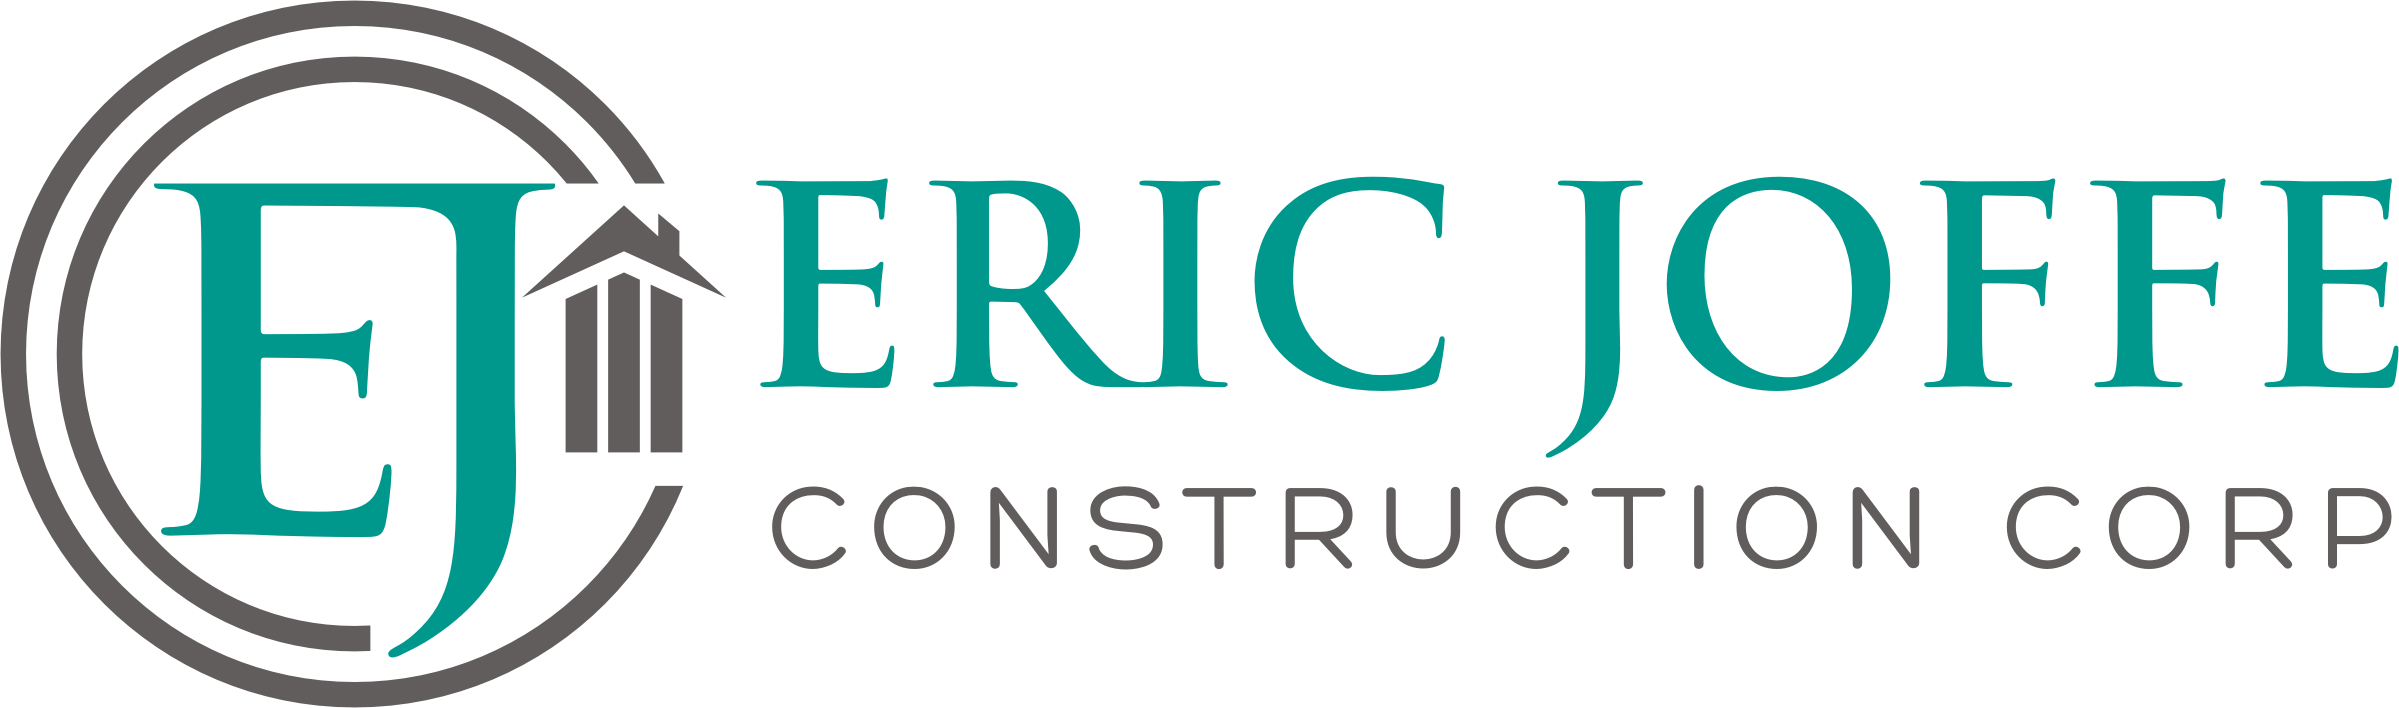 Eric Joffe Construction Corp